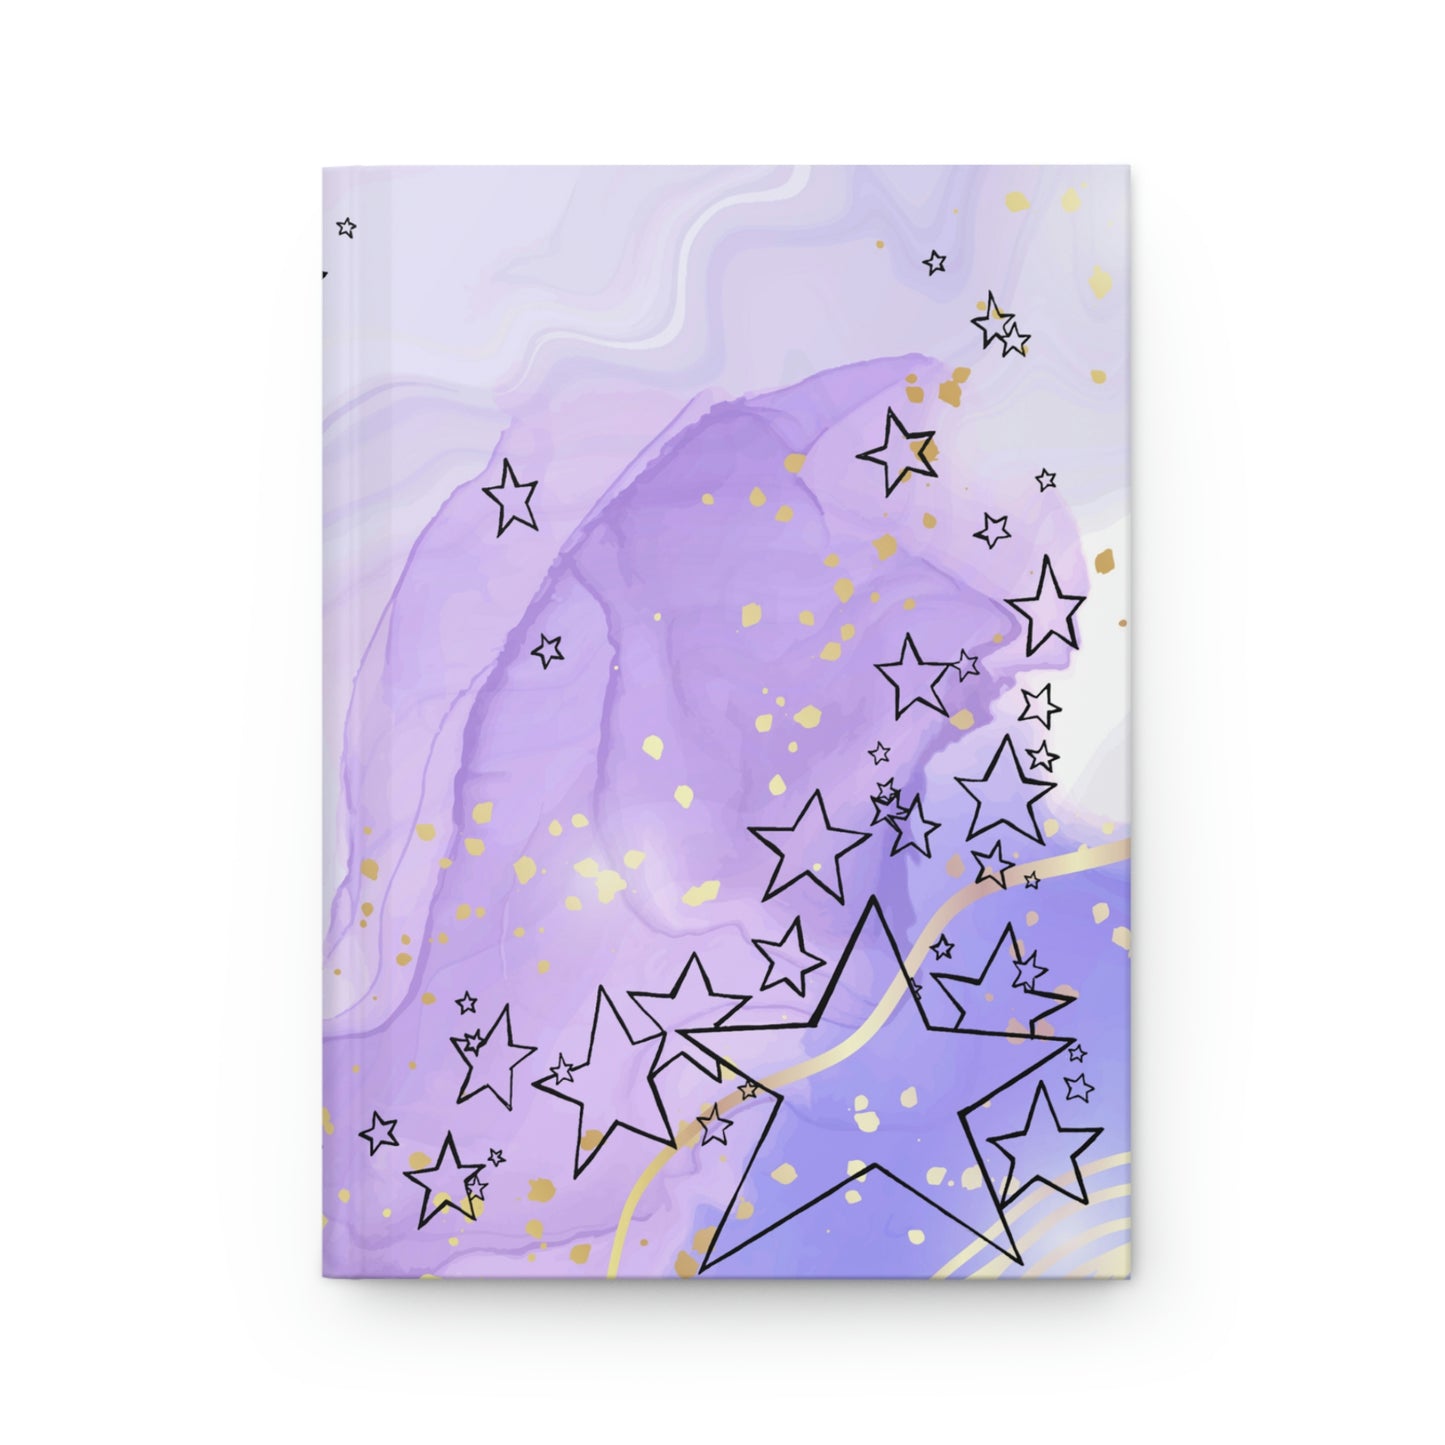 Violet Spirit Star Power Journal